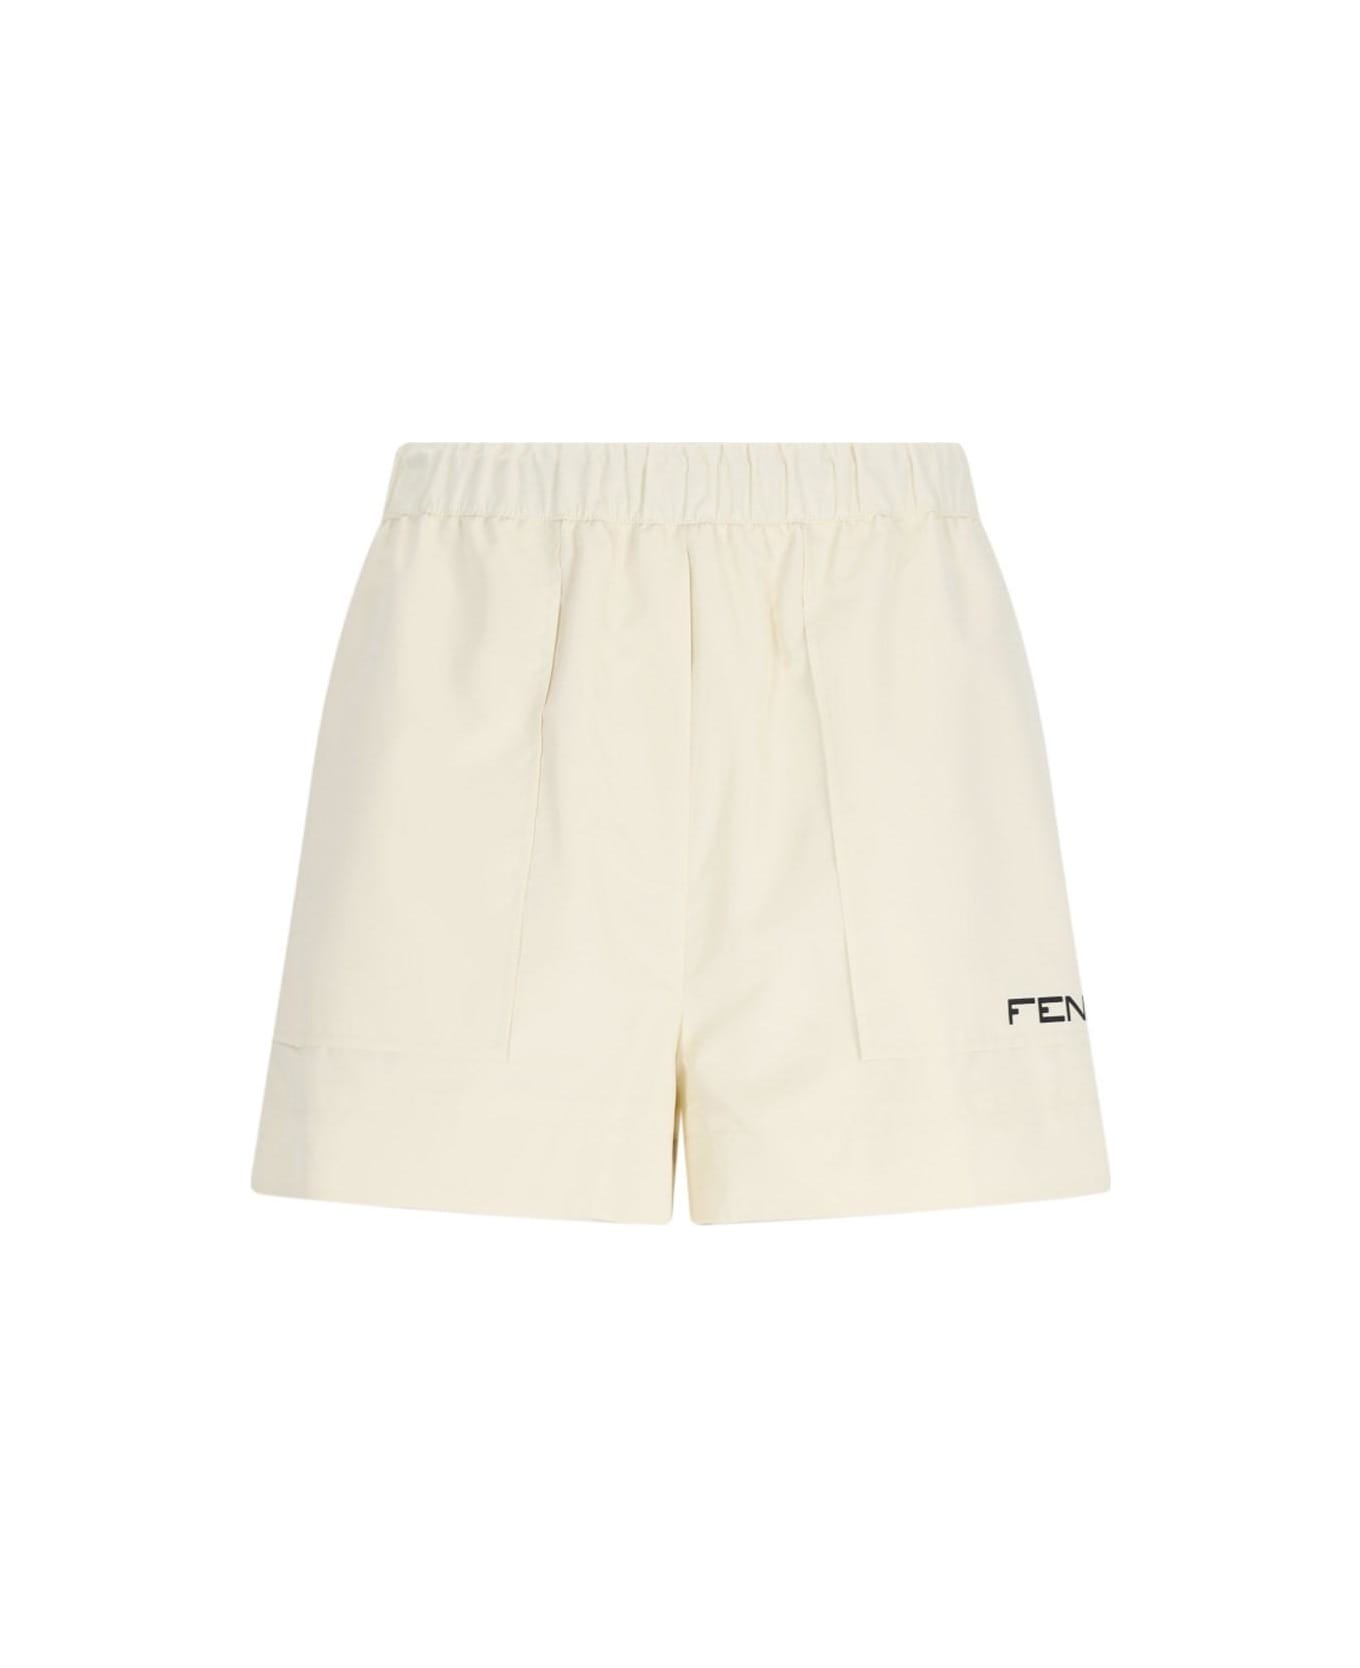 Fendi Logo Jogger Shorts - Beige ショートパンツ